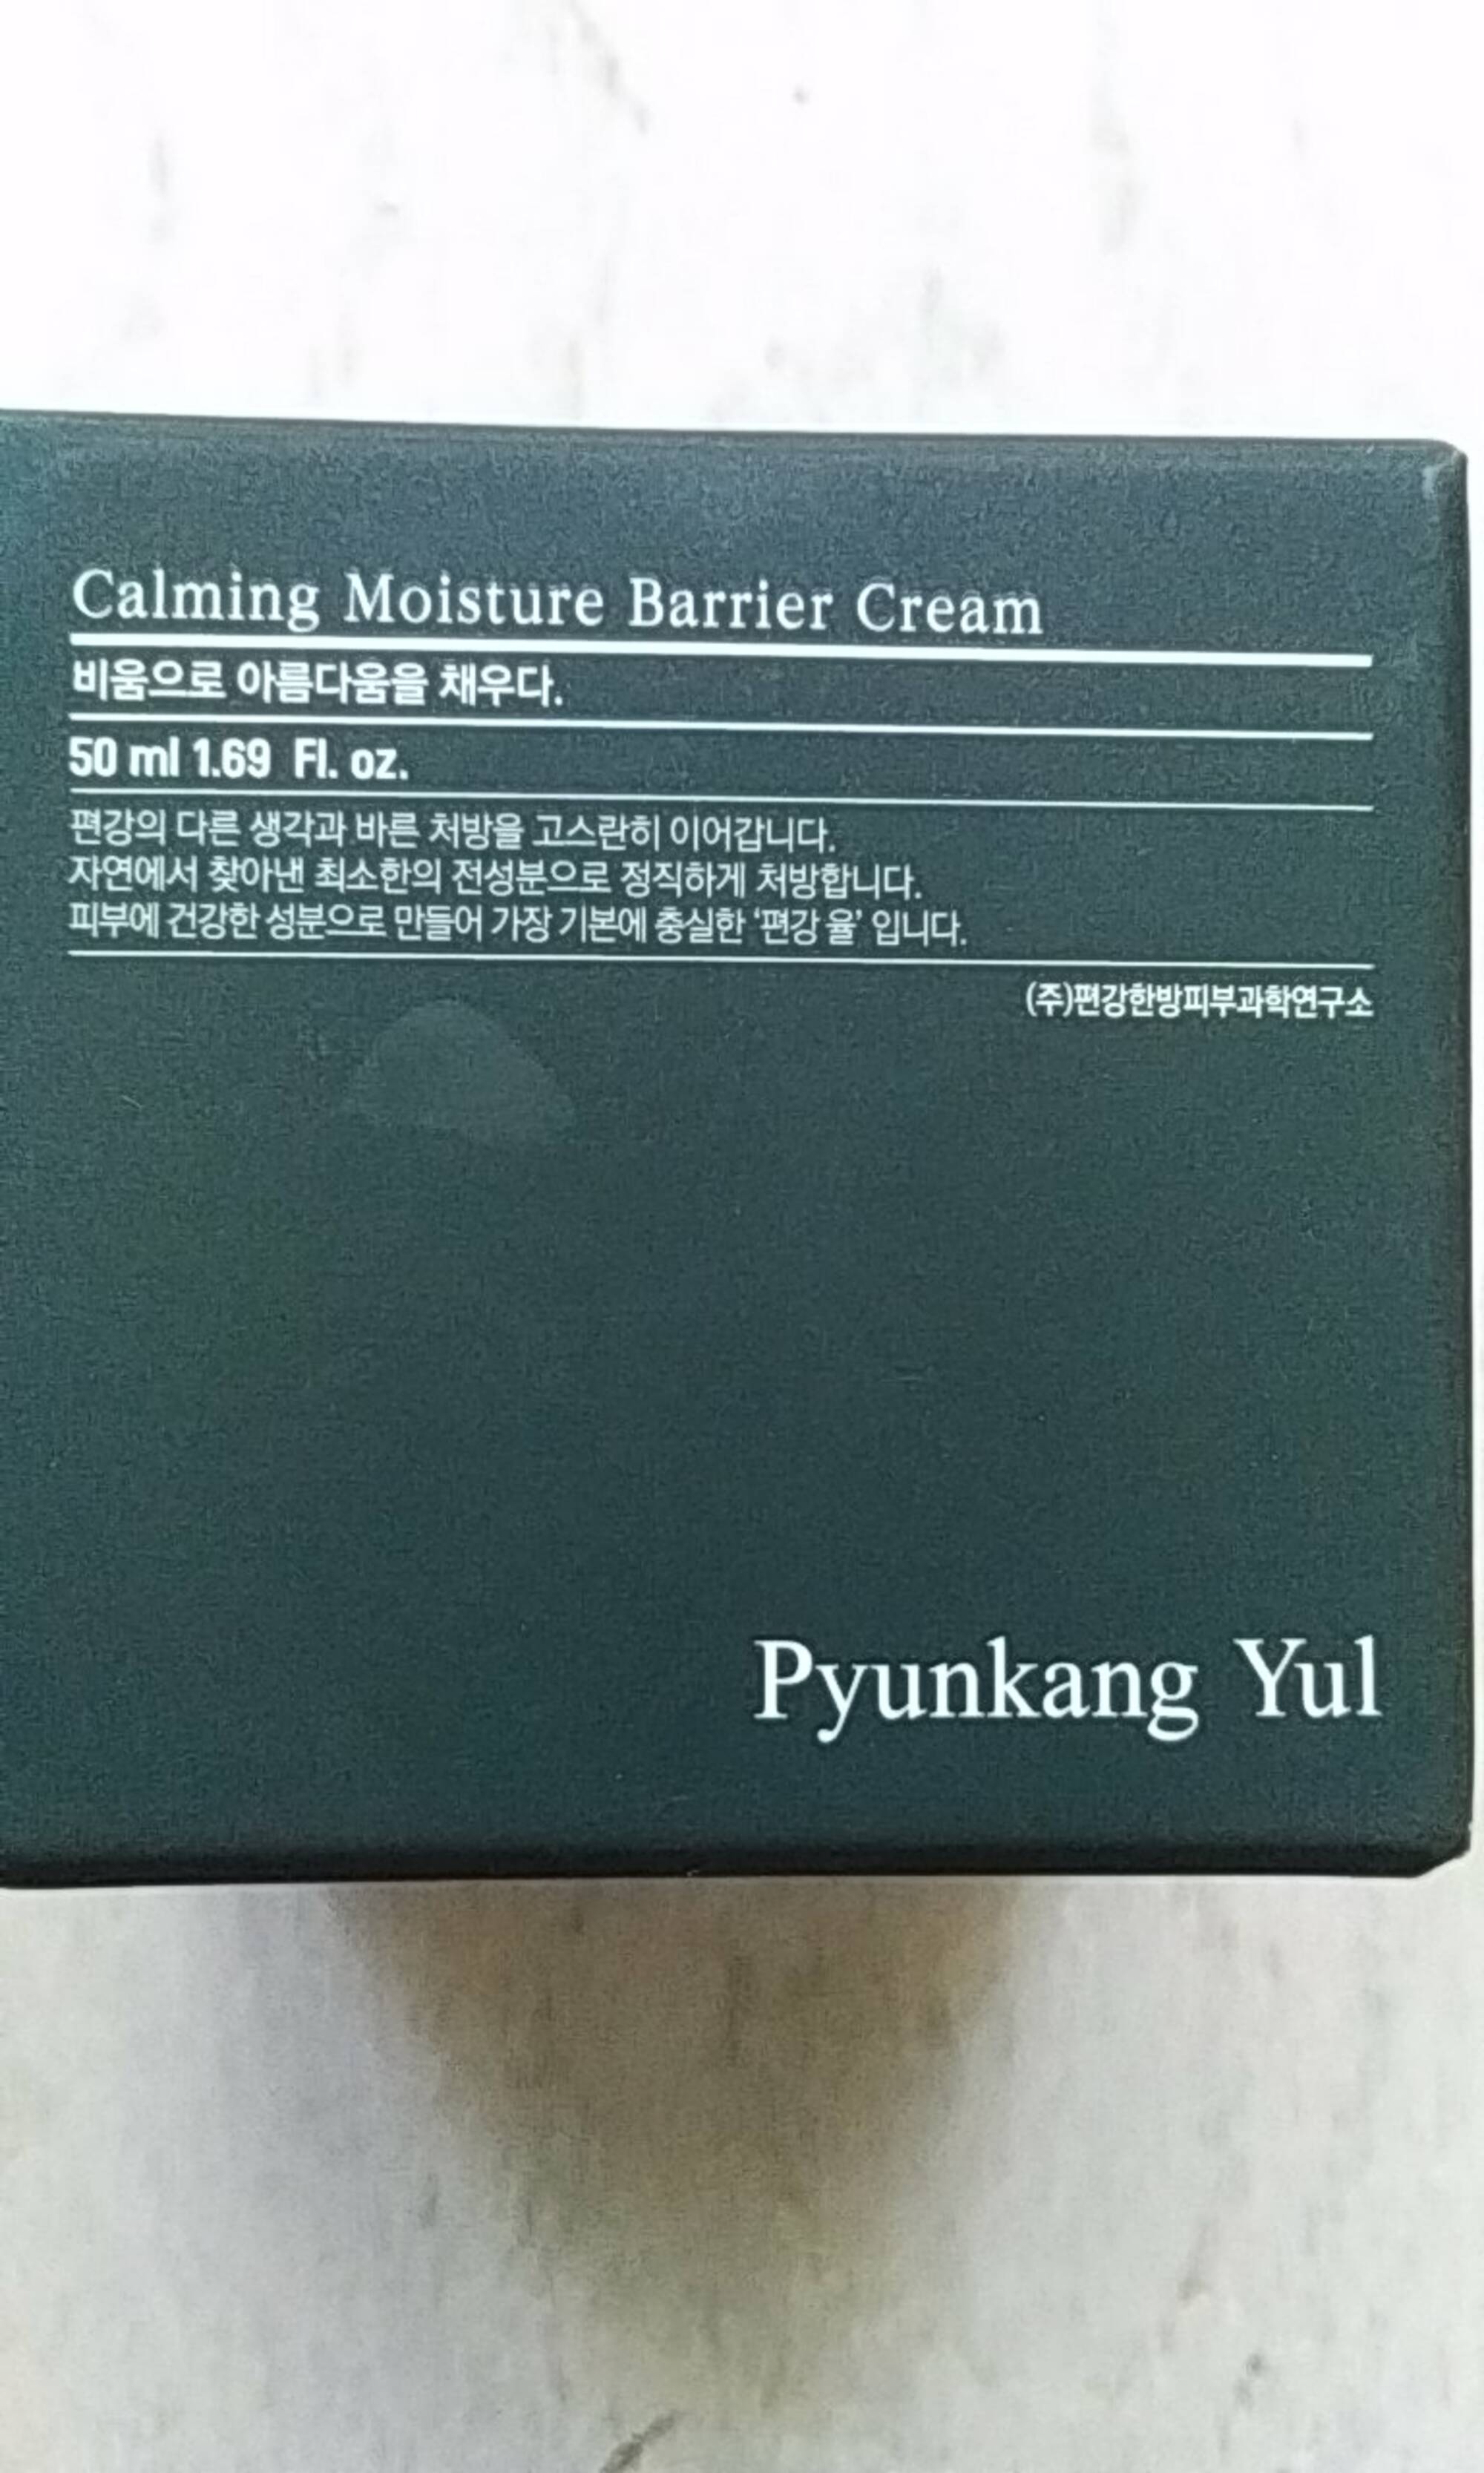 PYUNKANG YUL - Calming moisture barrier cream